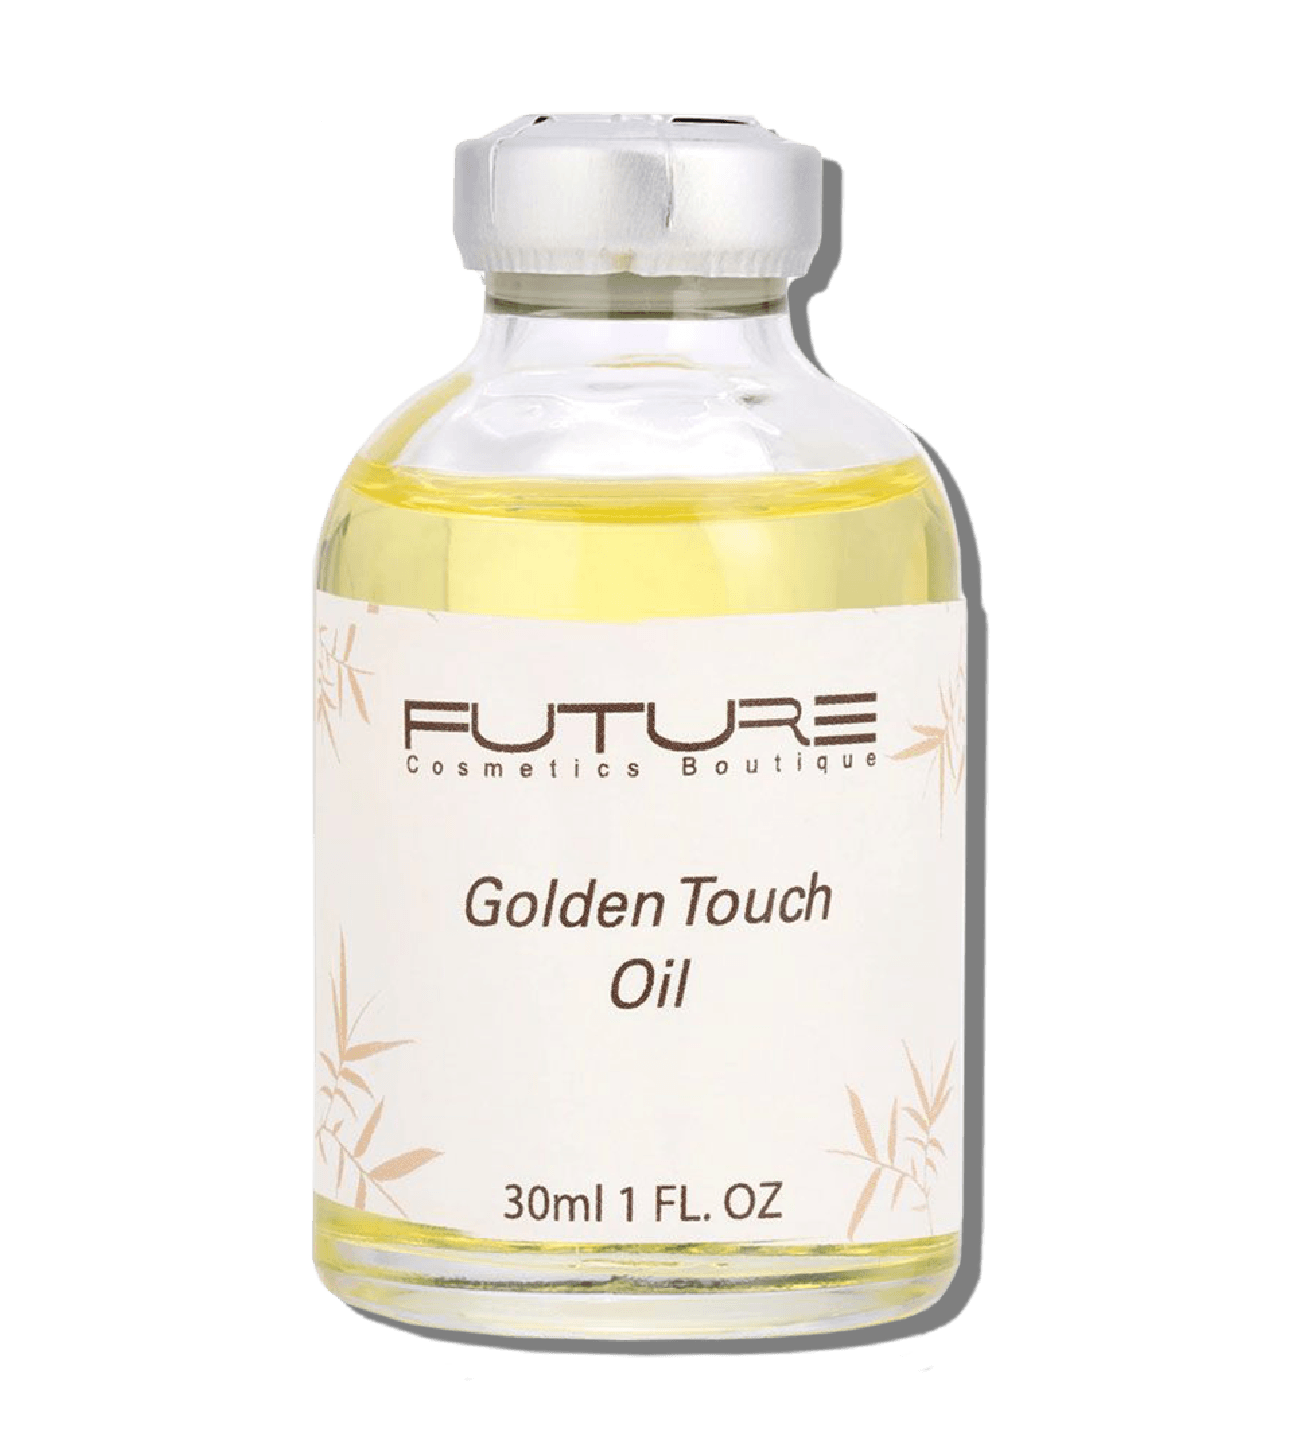 Golden Touch Oil